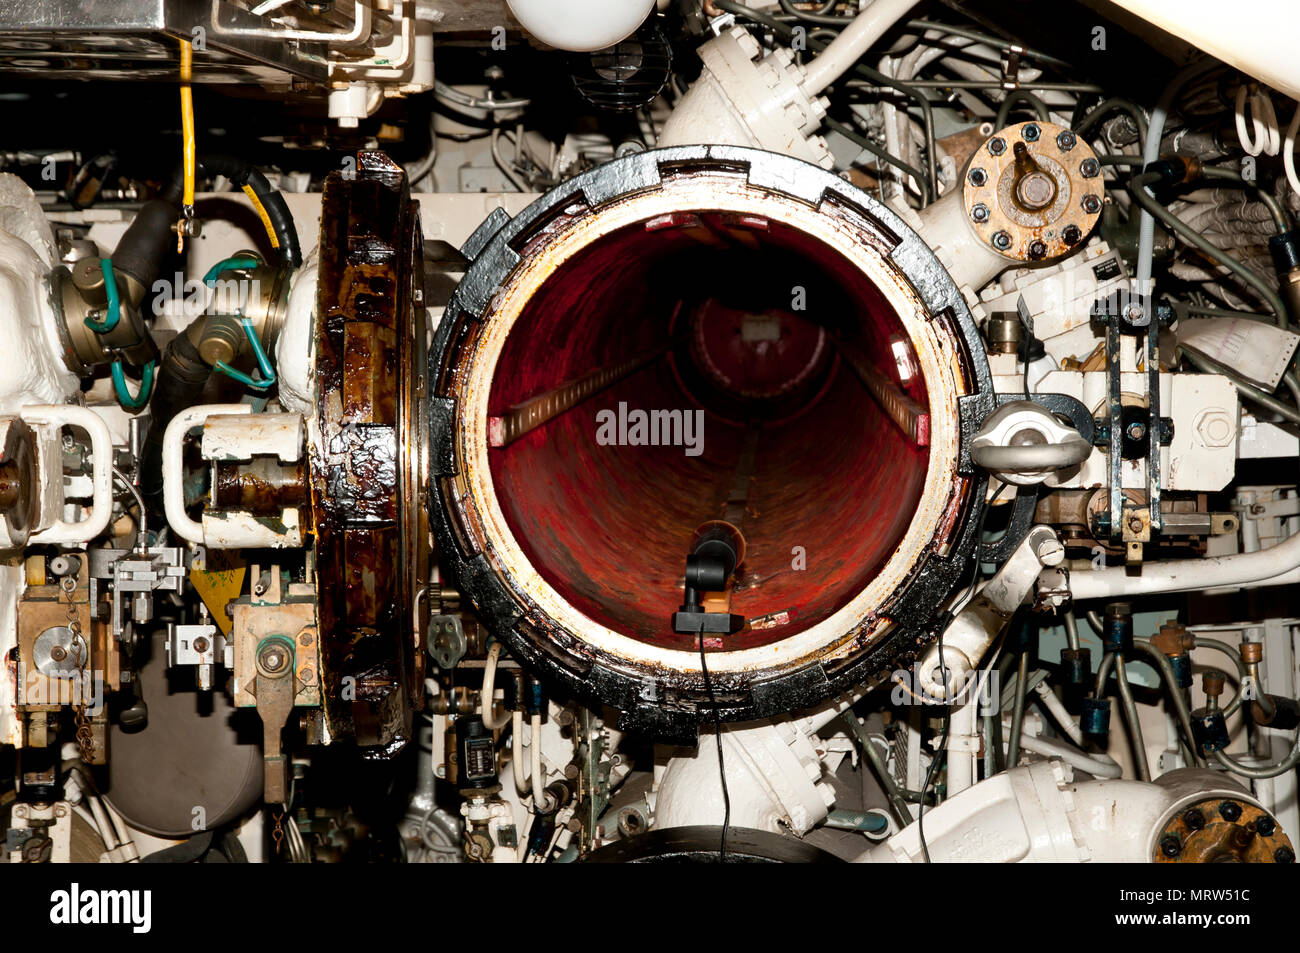 Submarine Torpedo Tube Stockfotografie - Alamy